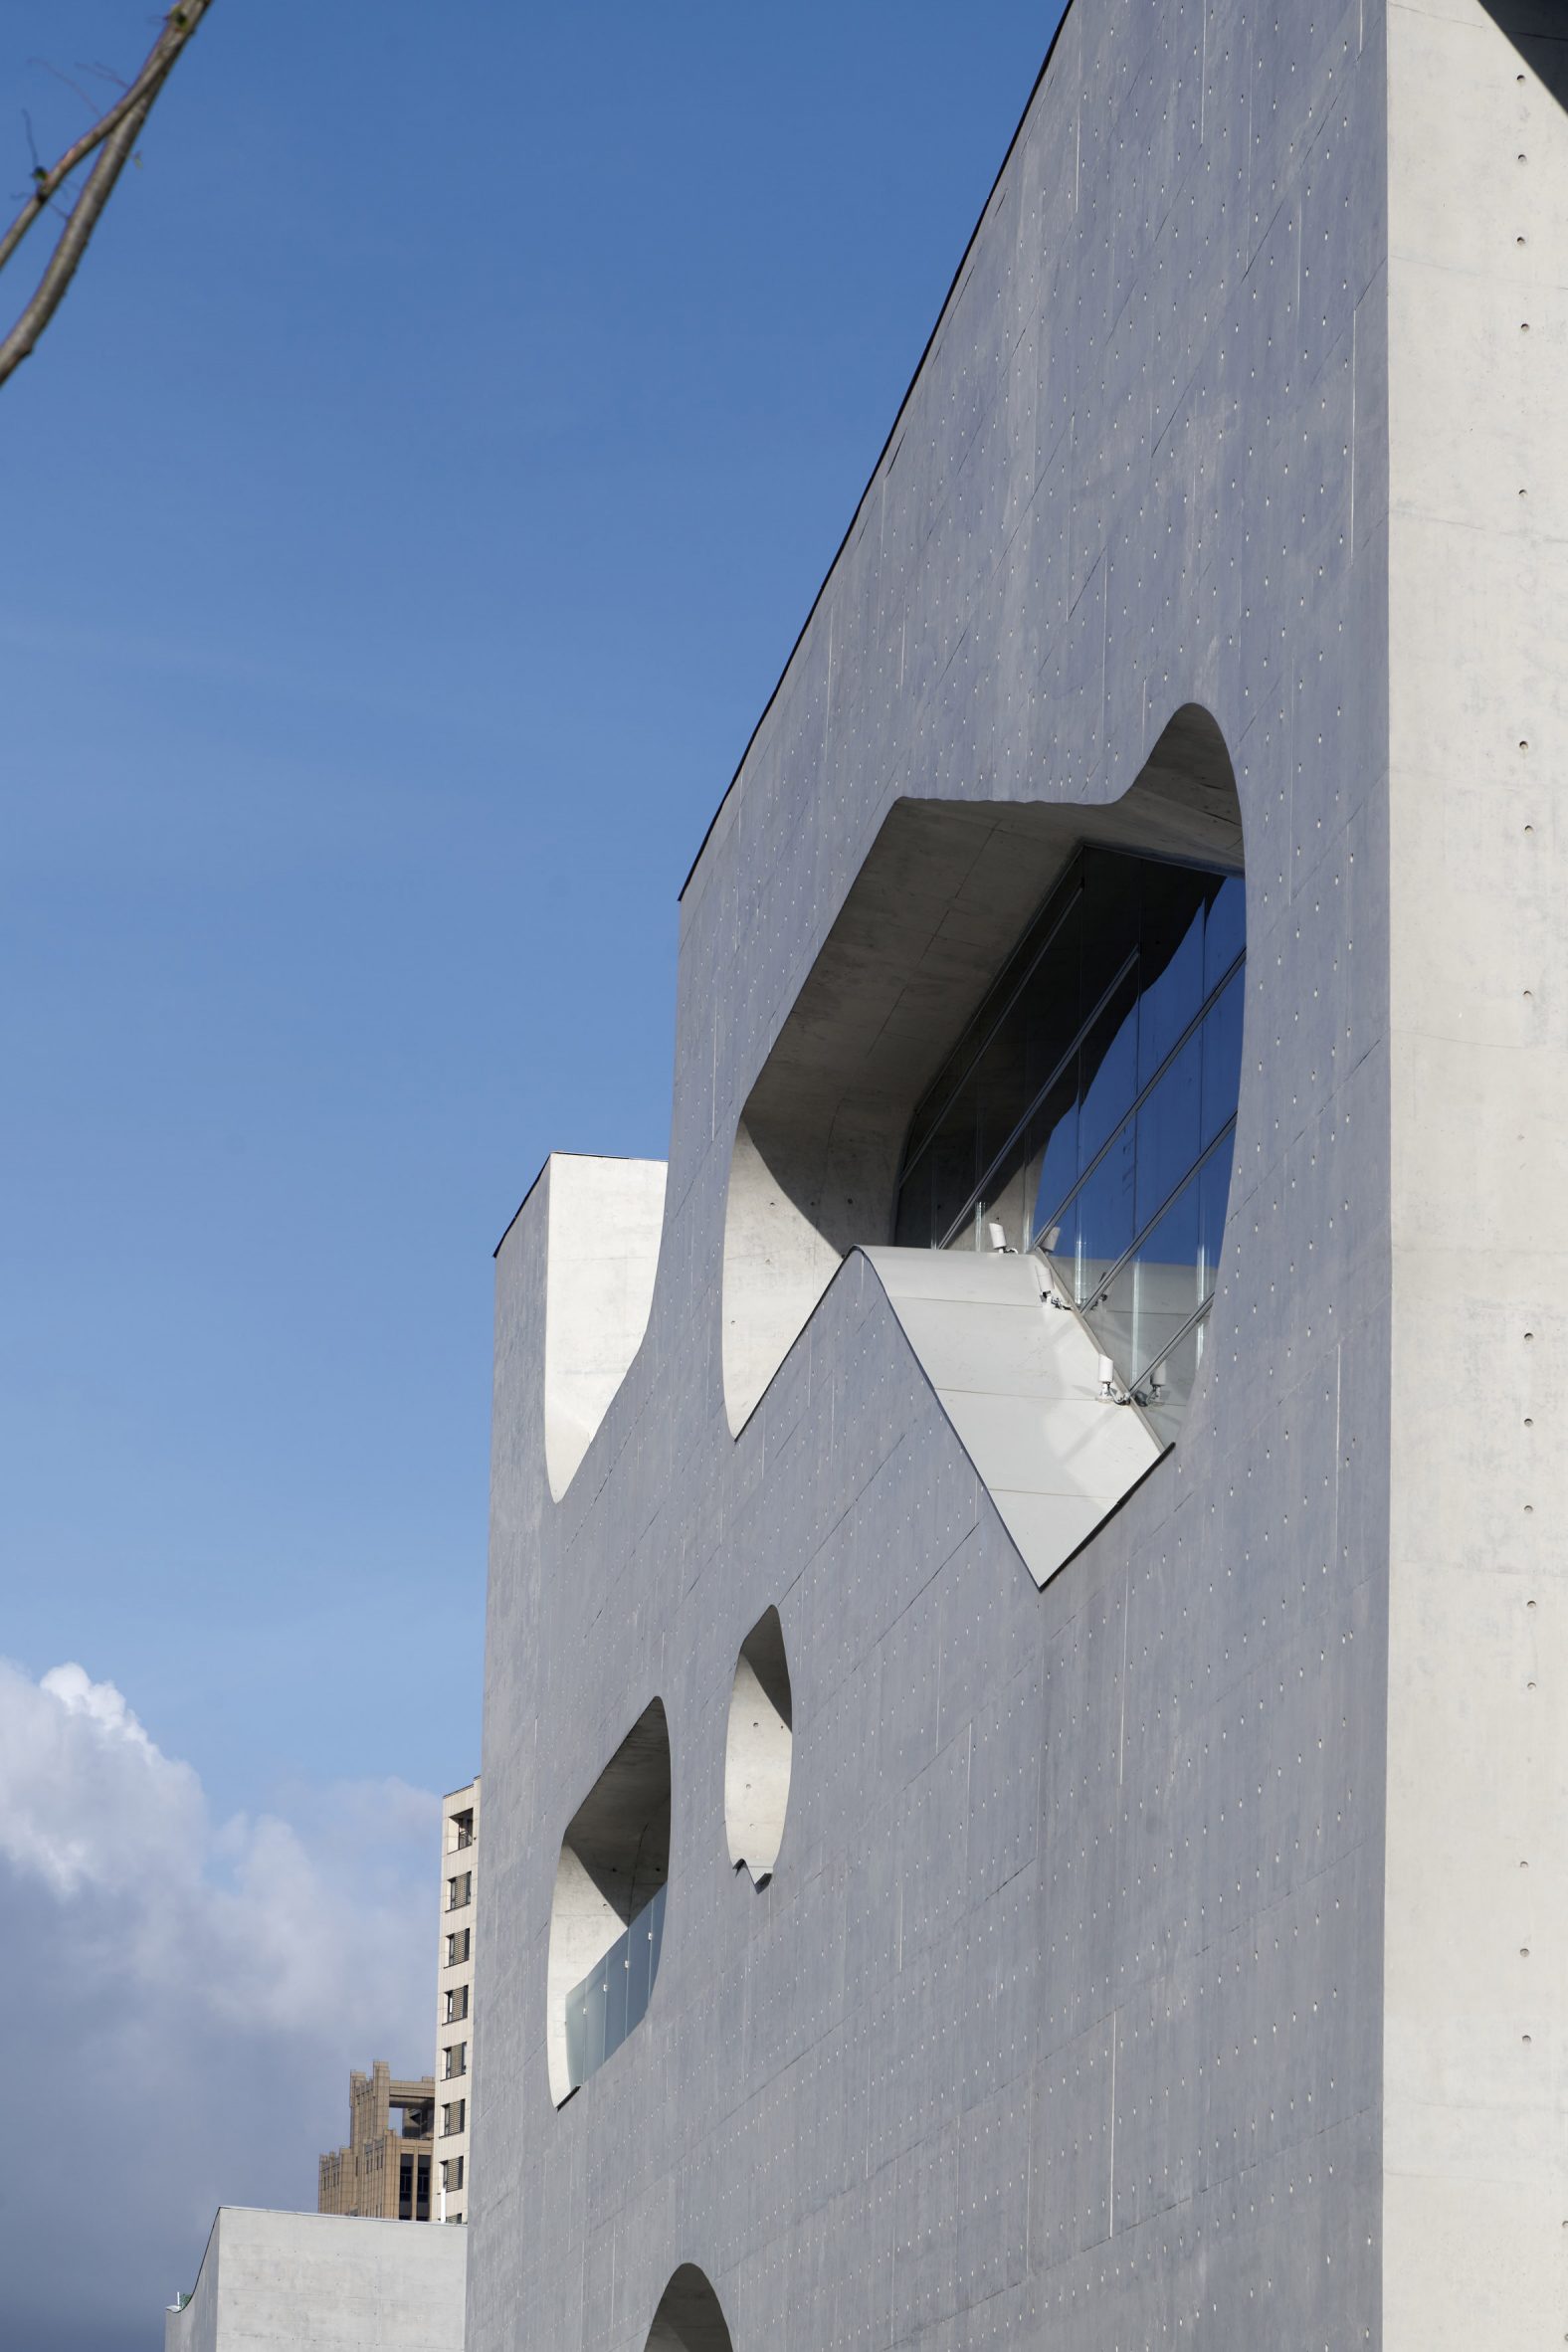 A grey building with irregular windows